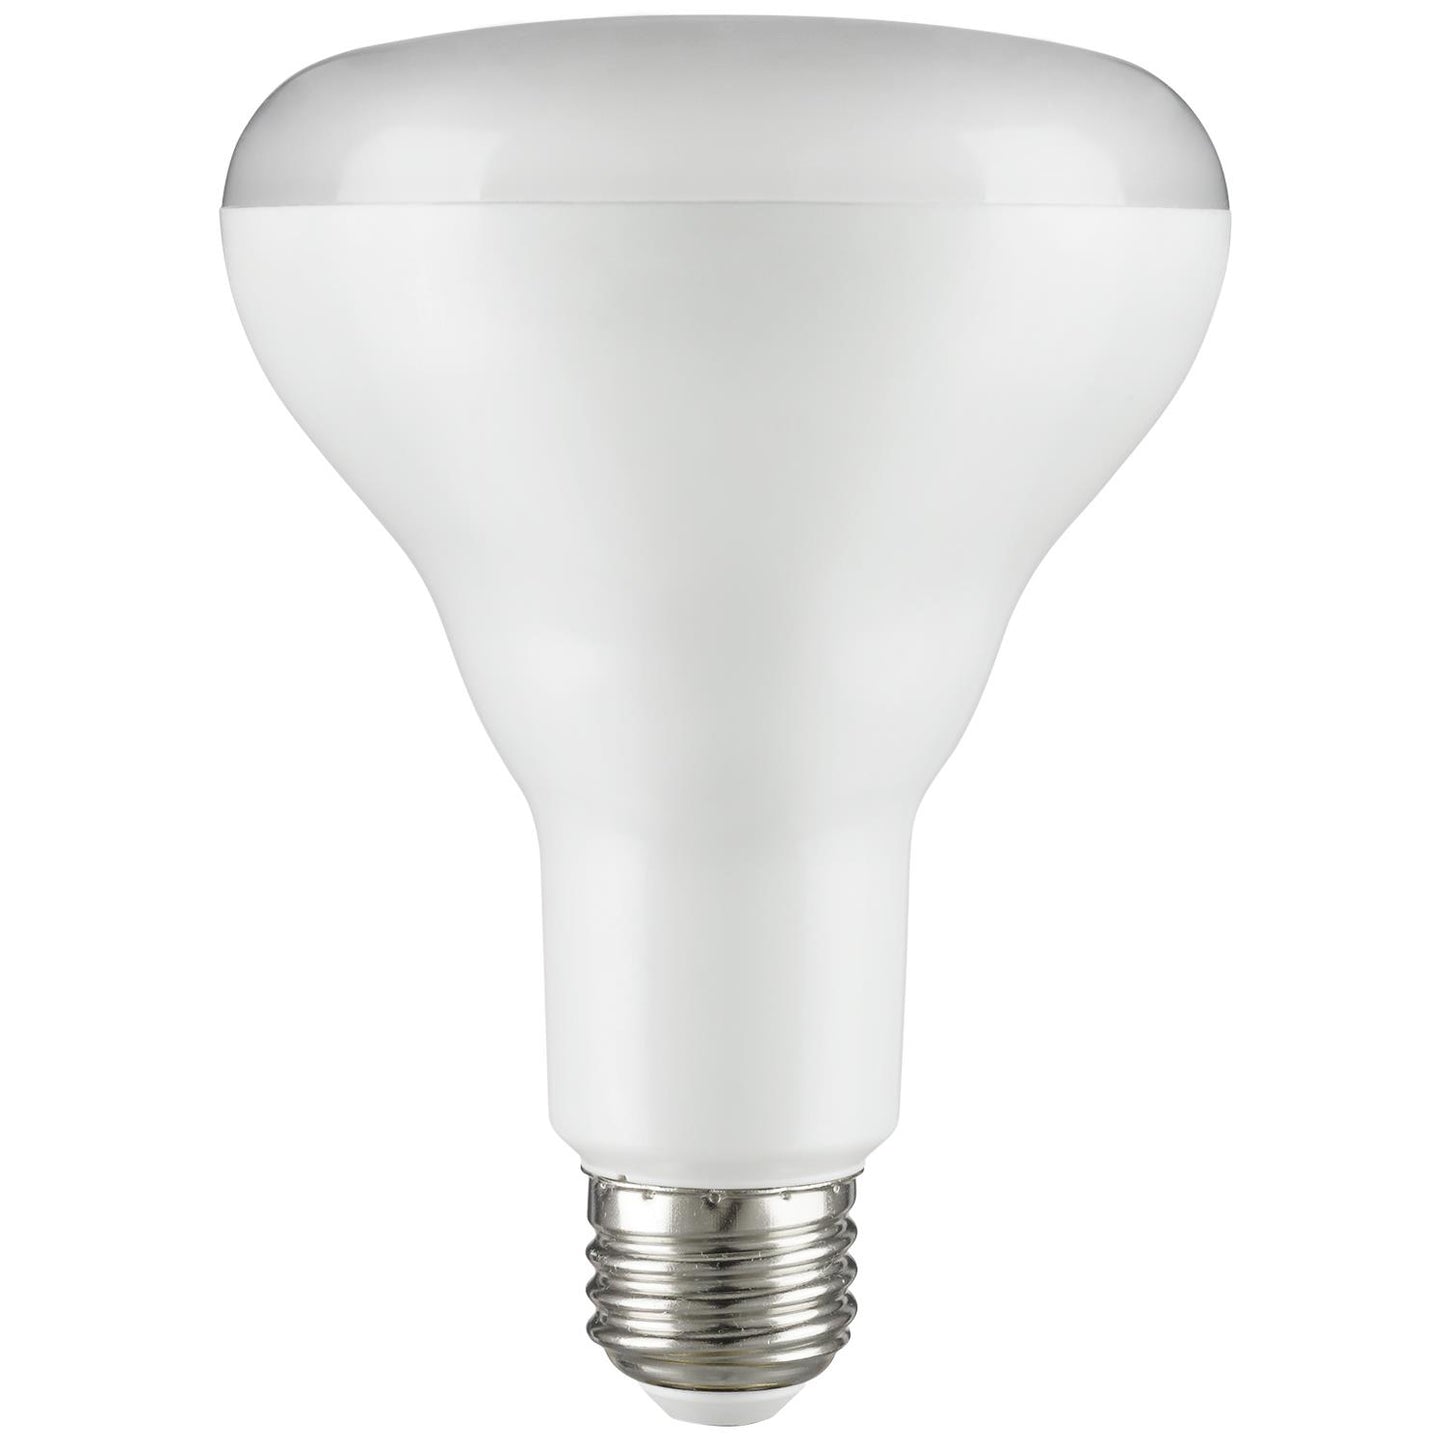 Sunlite LED BR30 Reflector 9W (65W Equivalent) Light Bulb Medium (E26) Base, Warm White